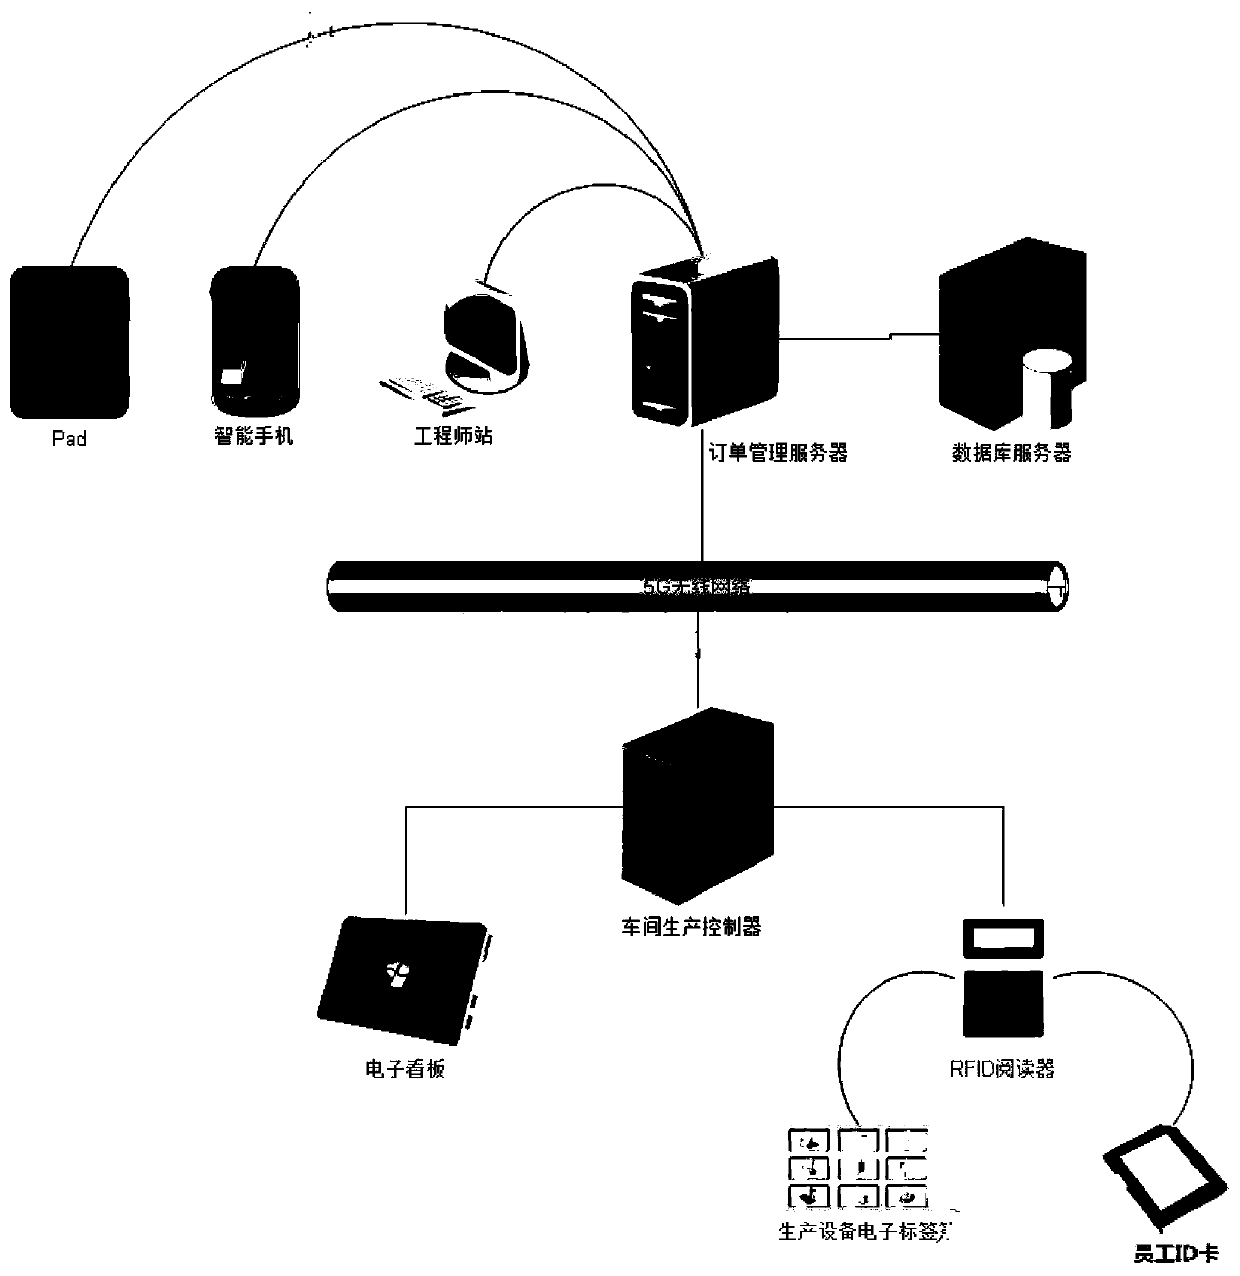 Production order management system based on 5G network